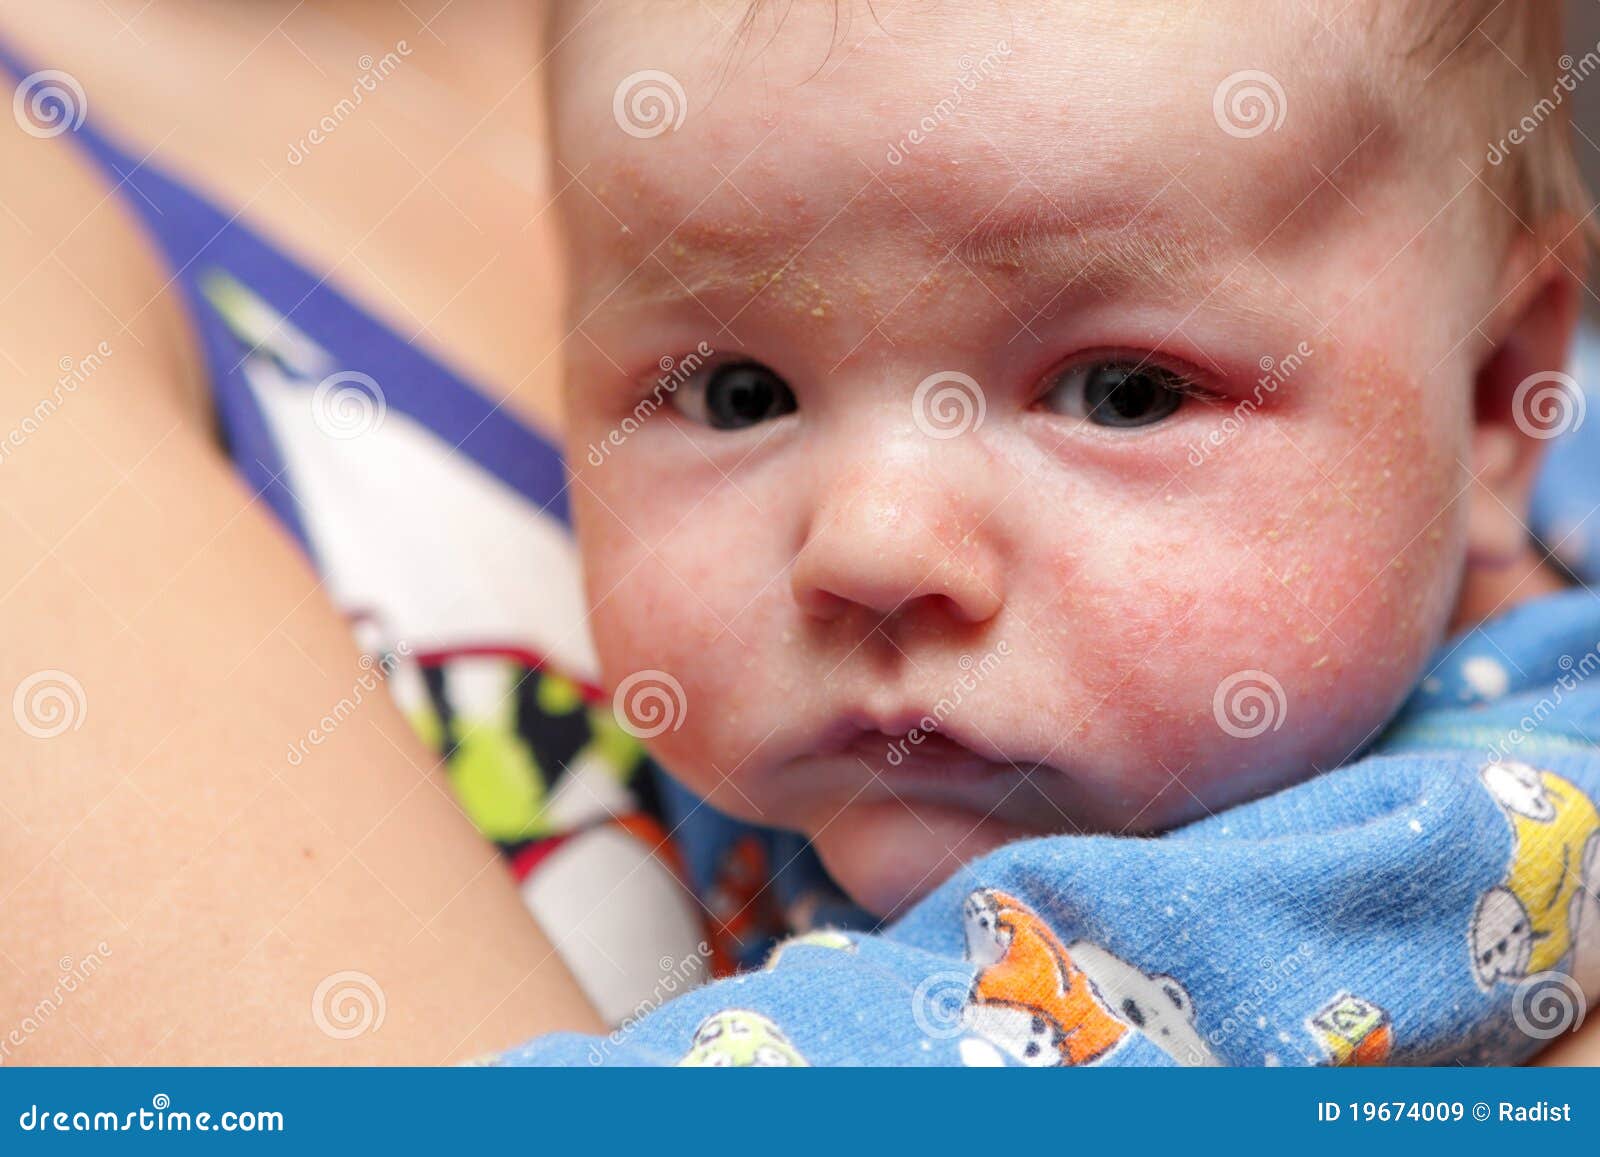 eczema on face of newborn